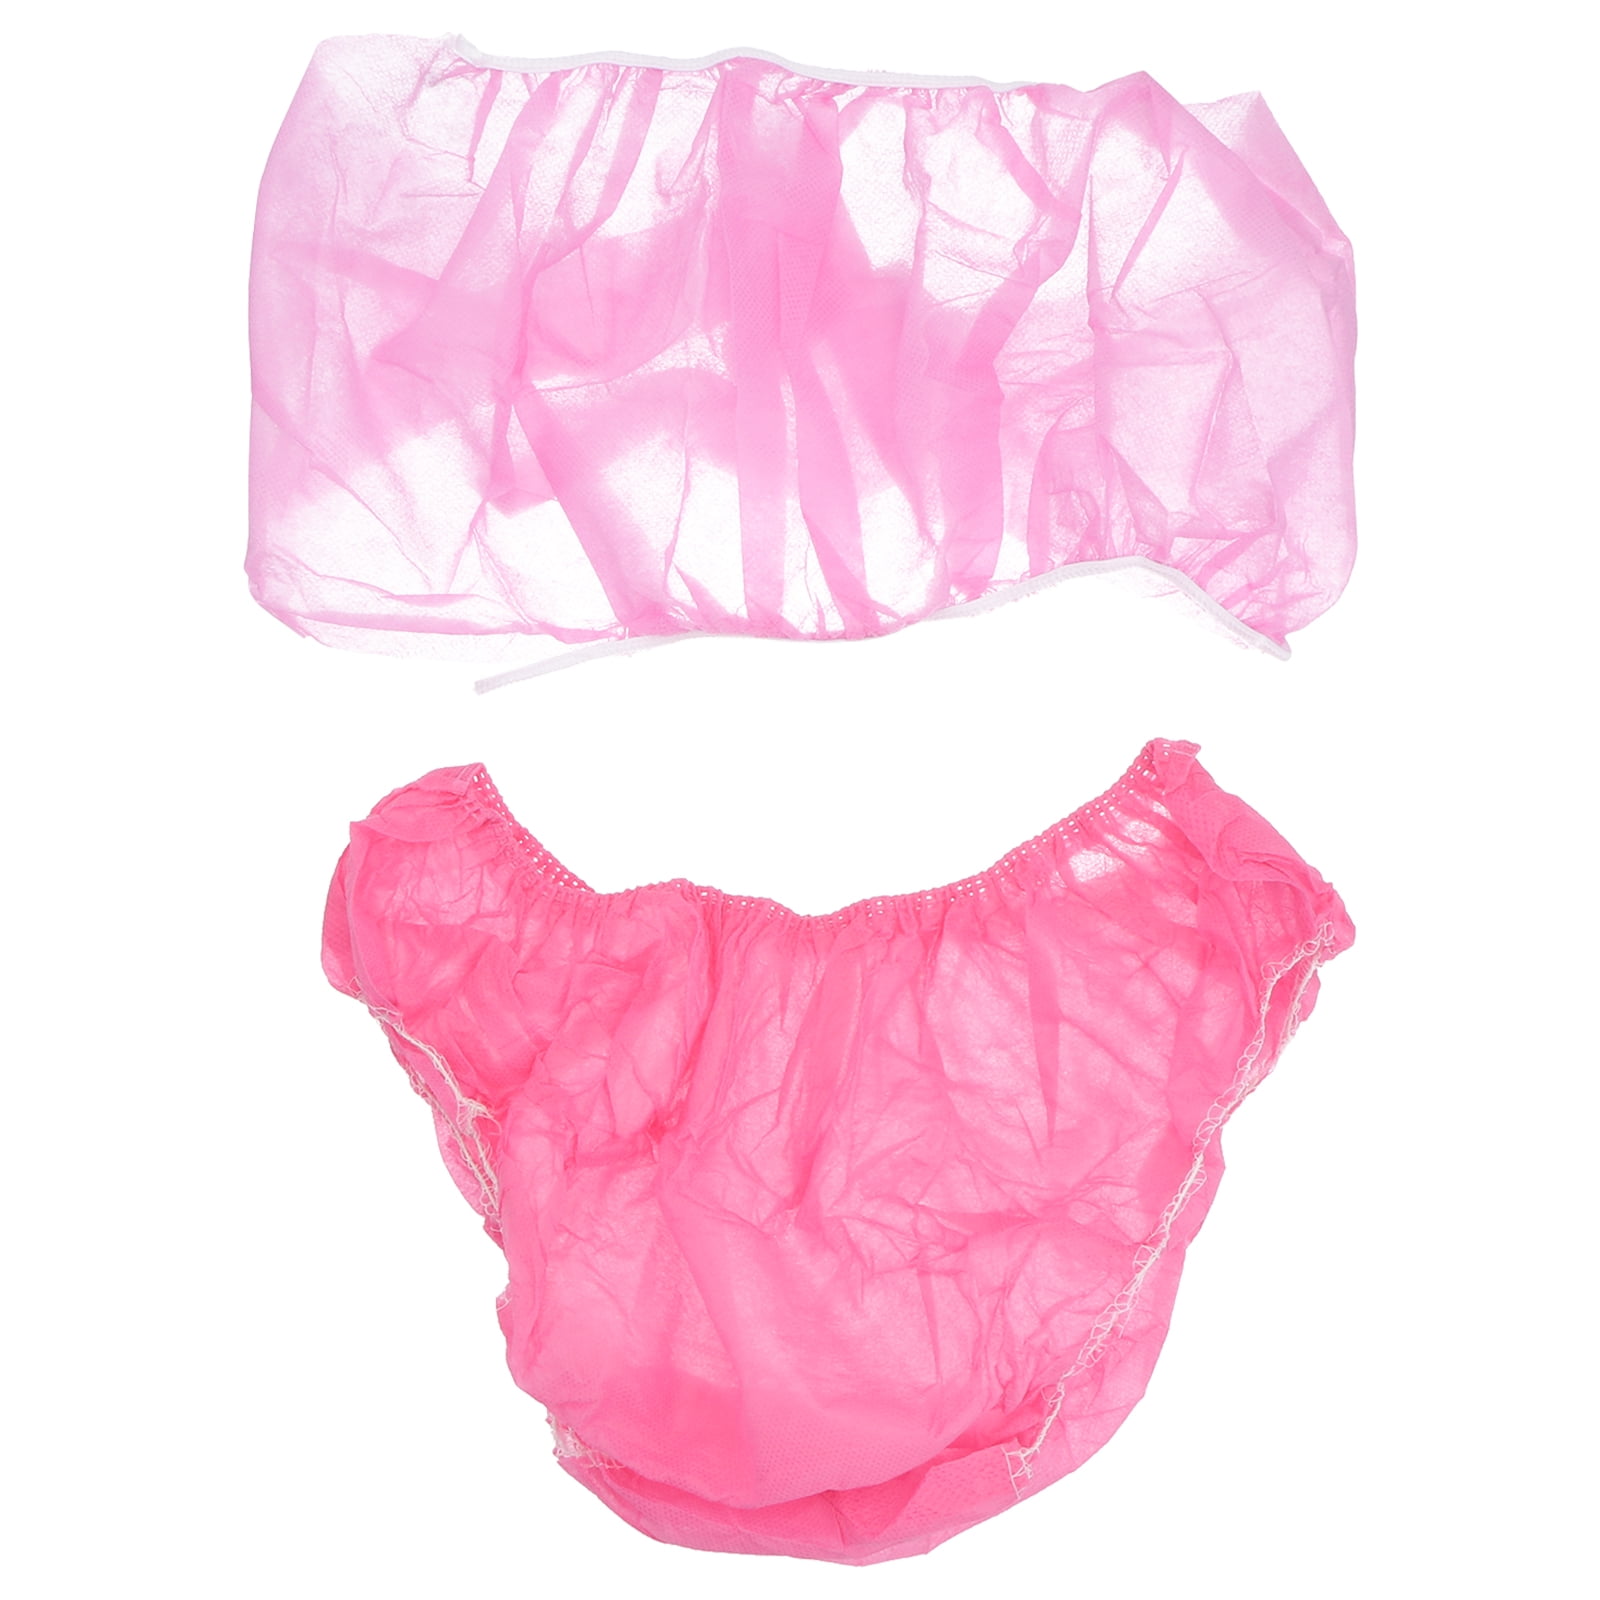 DOITOOL 7pcs Postpartum Disposable Underwear Travel Panties Non